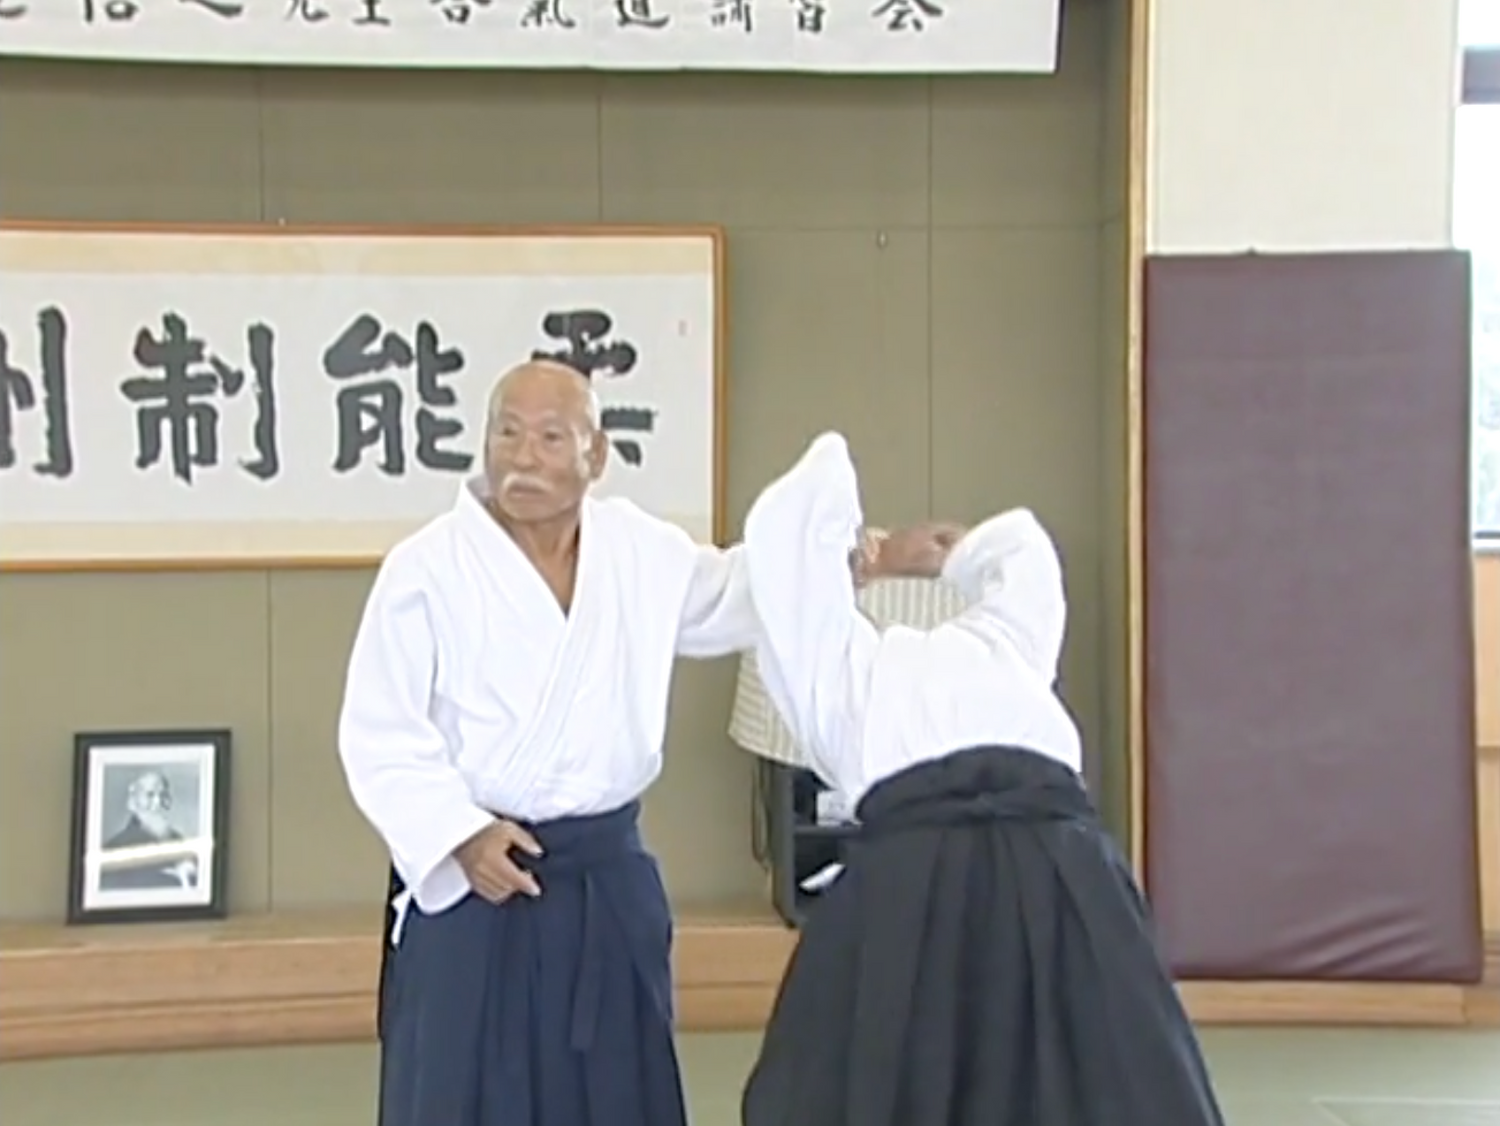 Aikido Training August 2004 DVD with Nobuyuki Watanabe (Preowned)